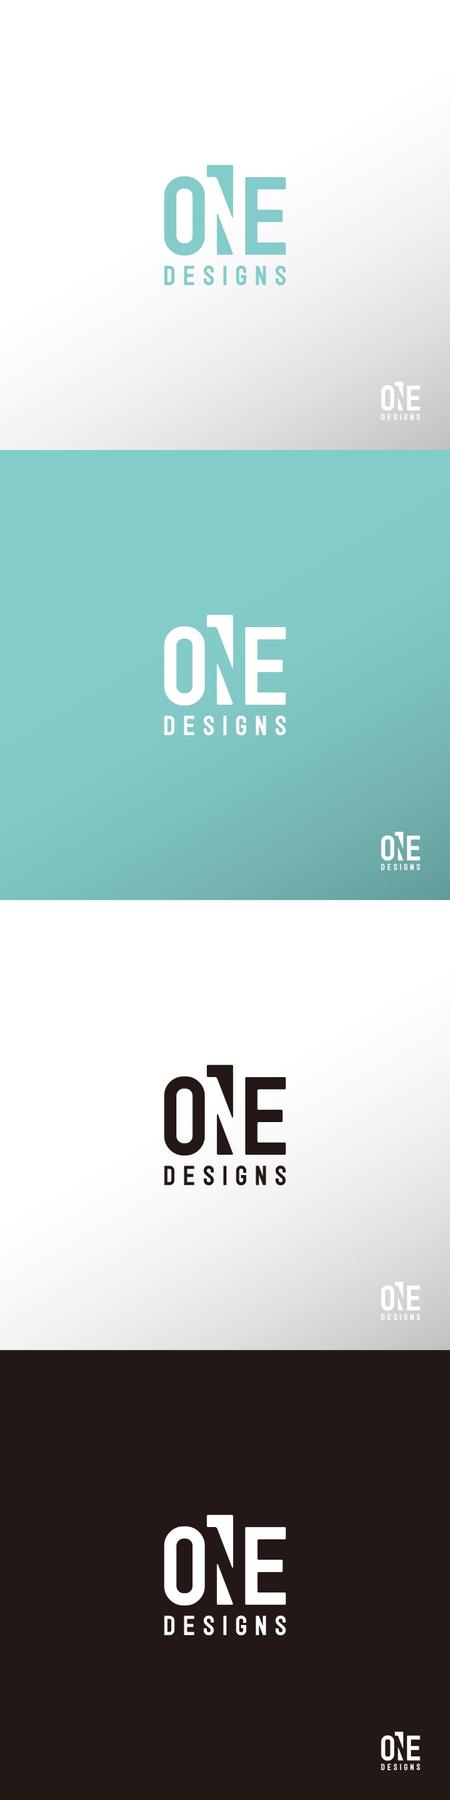 doremi (doremidesign)さんの海外輸入メーカー「ONE DESIGNS」のロゴ作成依頼への提案